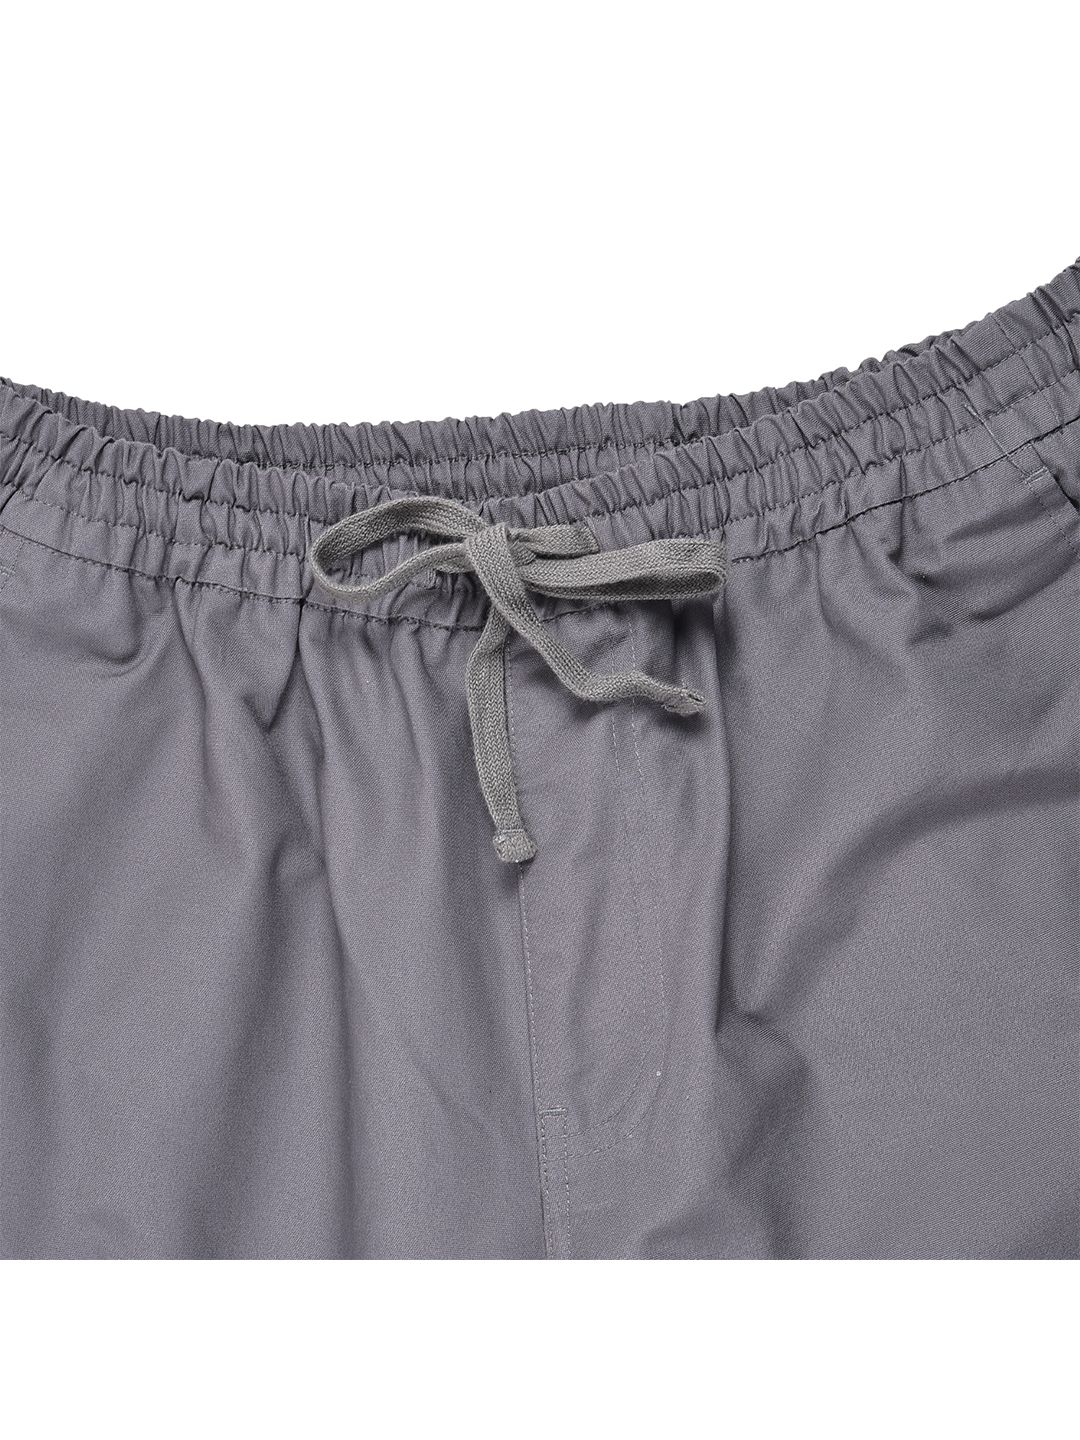 Grey jogger pants